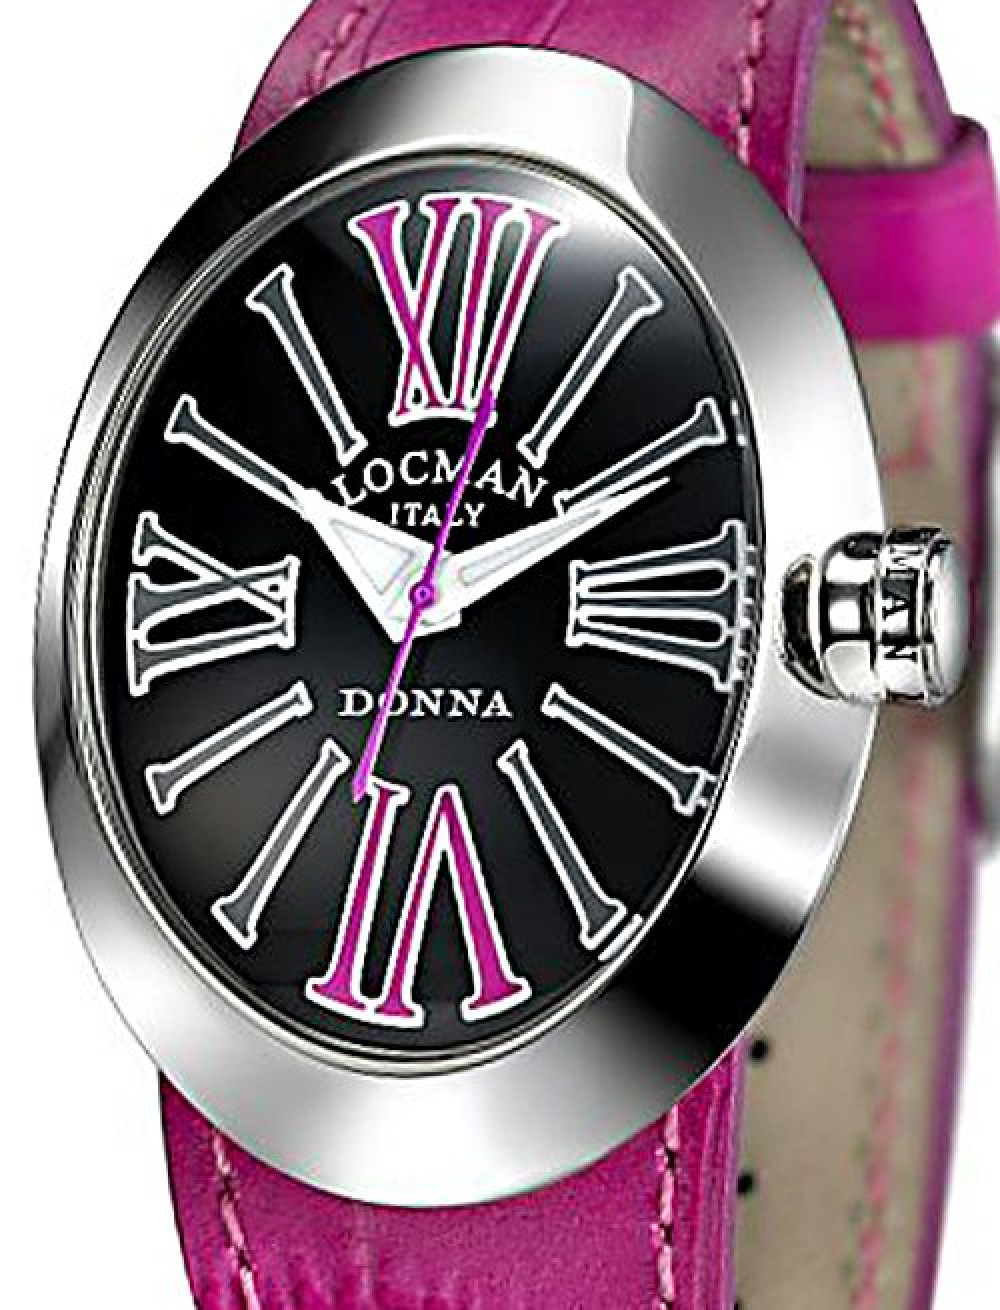 Zegarek firmy Locman, model Donna